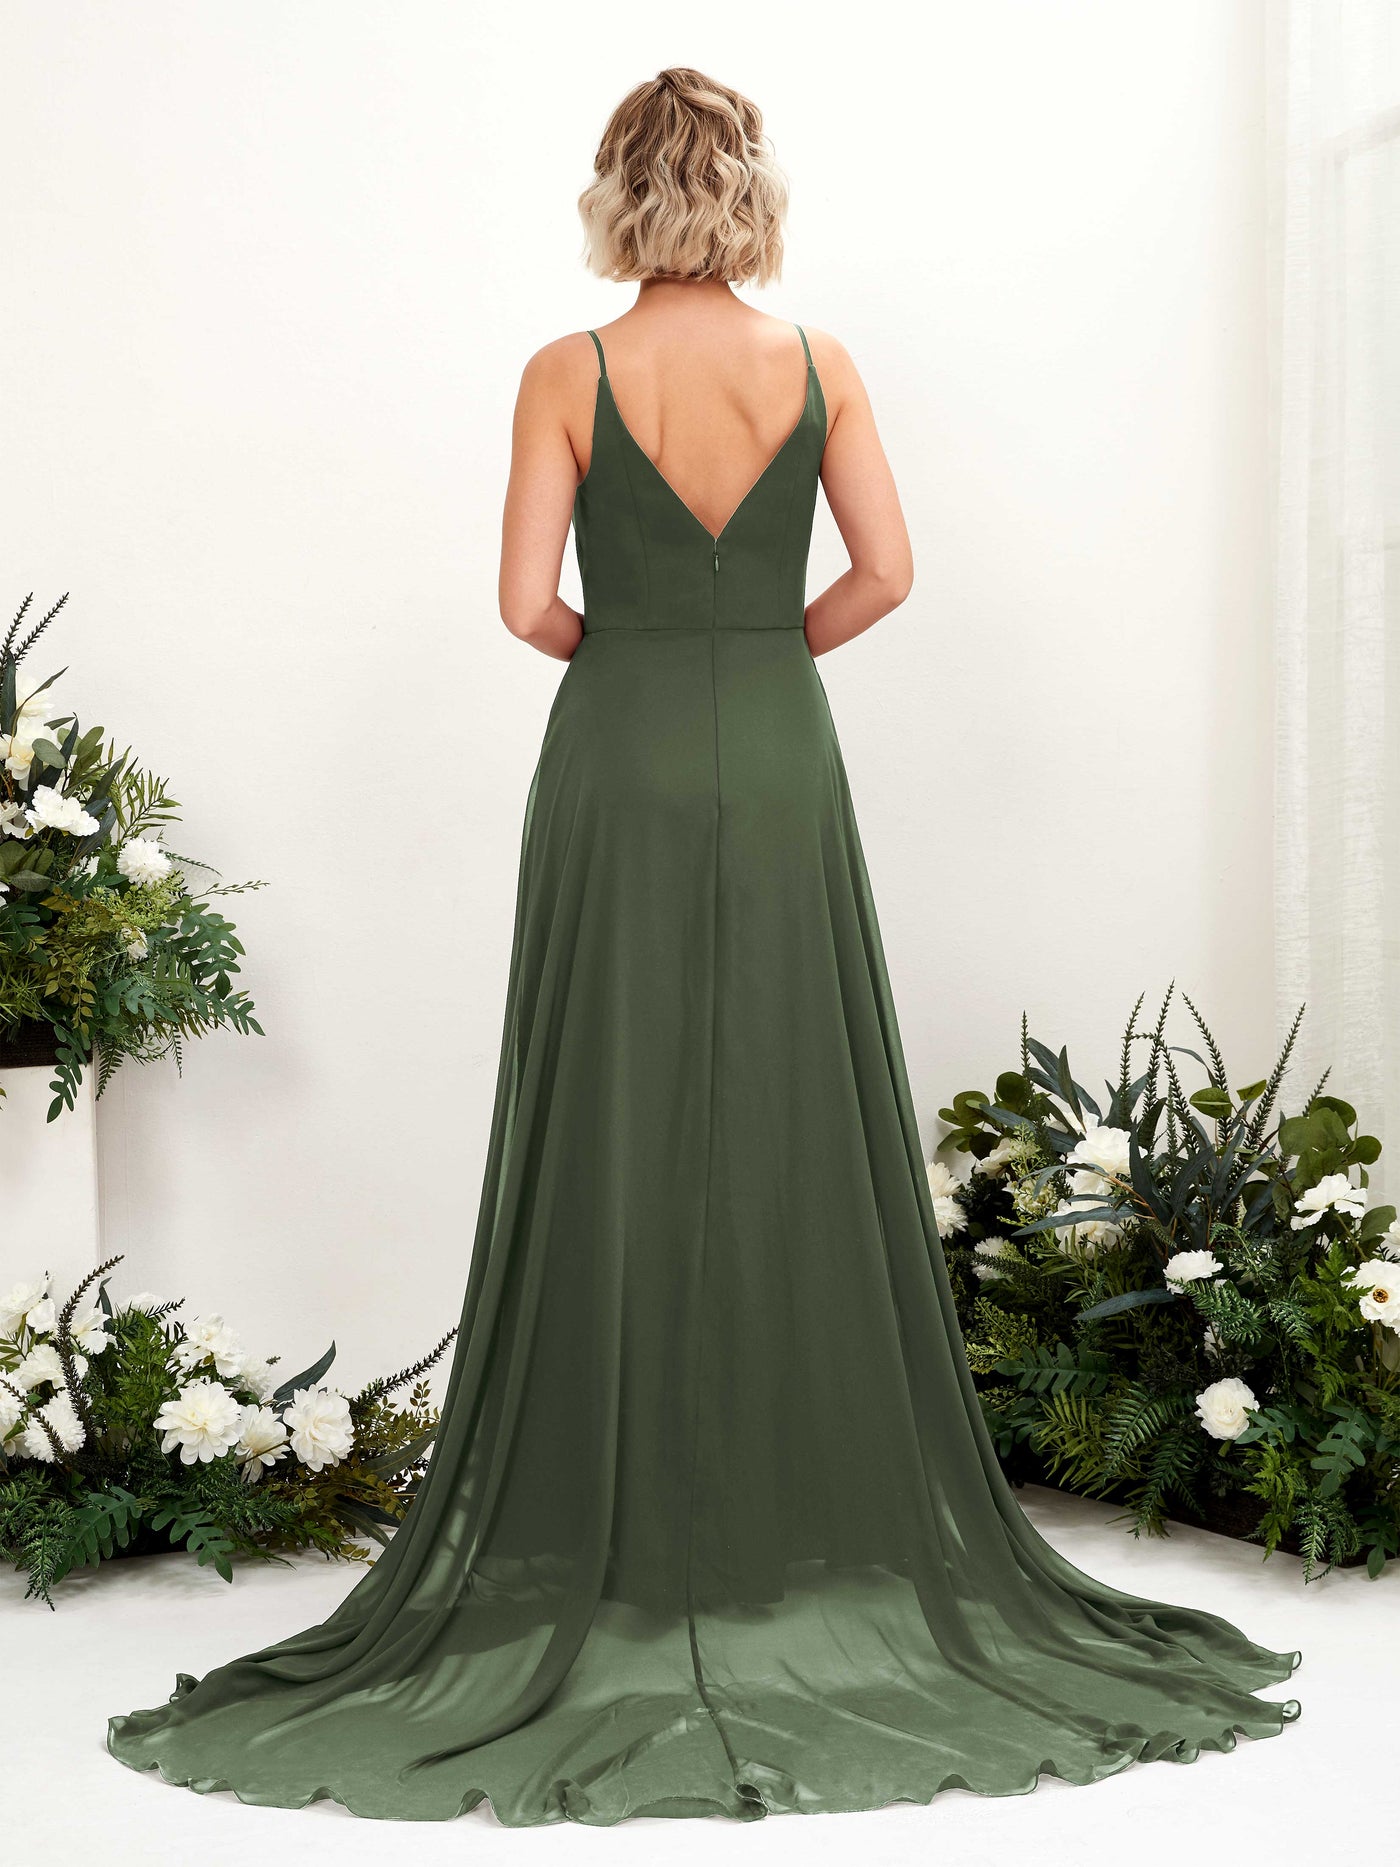 Martini Olive Bridesmaid Dresses Bridesmaid Dress A-line Chiffon V-neck Full Length Sleeveless Wedding Party Dress (81224107)#color_martini-olive